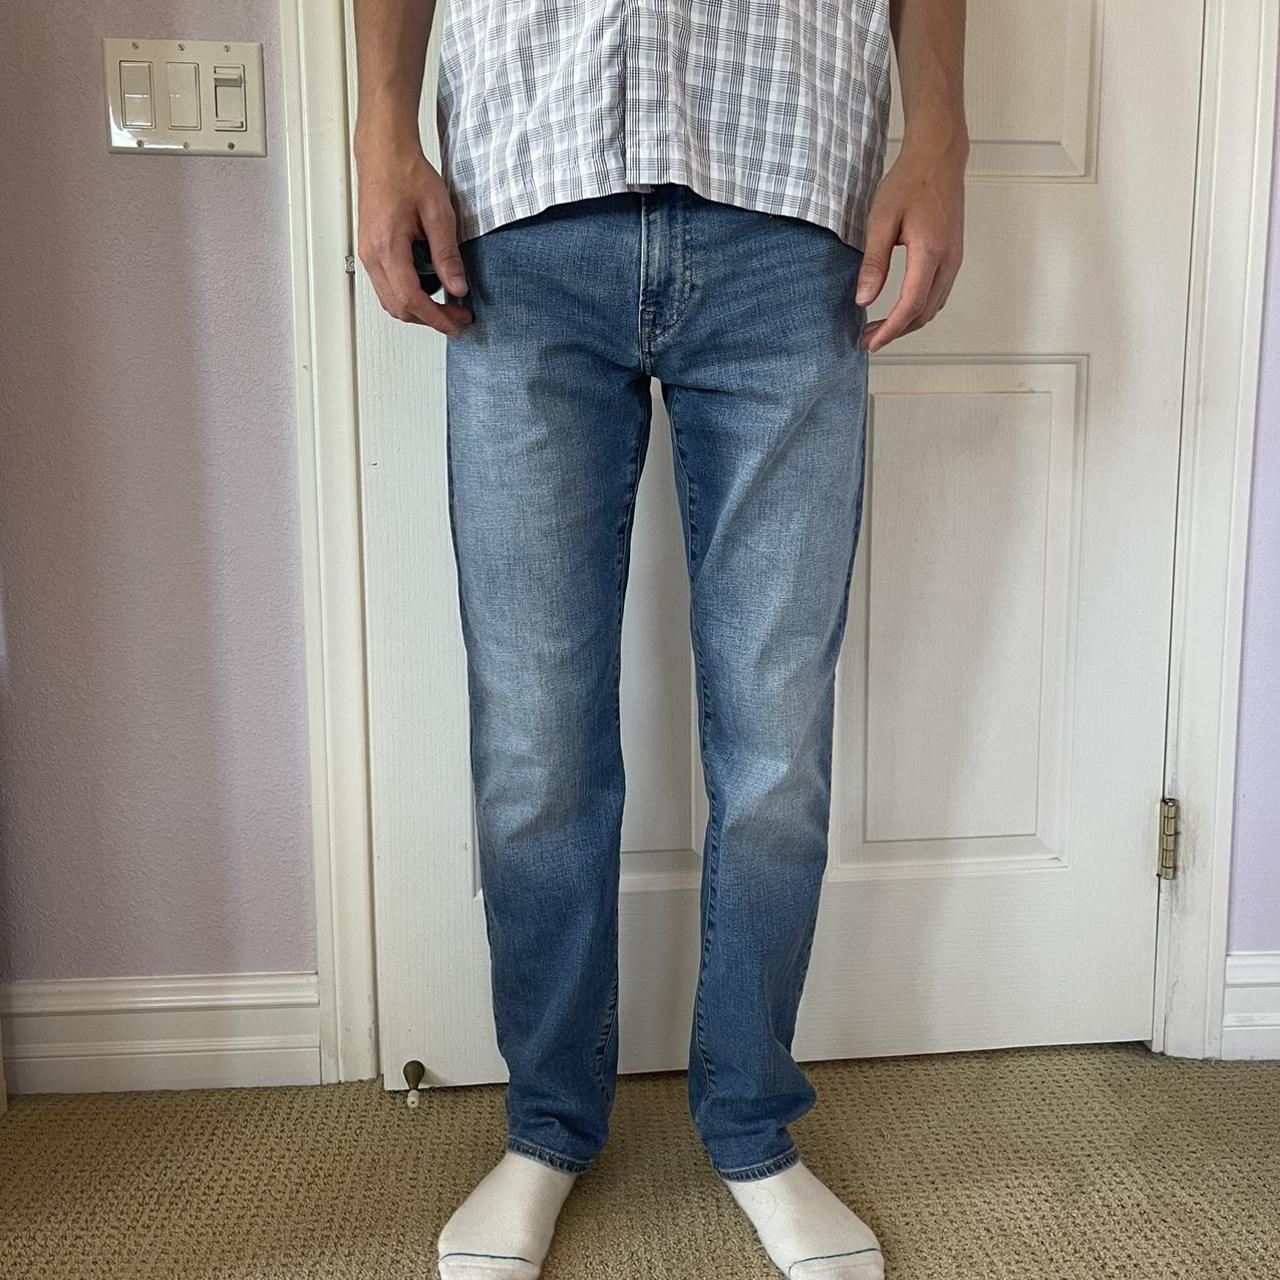 Gap Flex Denim Slim Soft Wear Jeans 30/32 Brand new - Depop